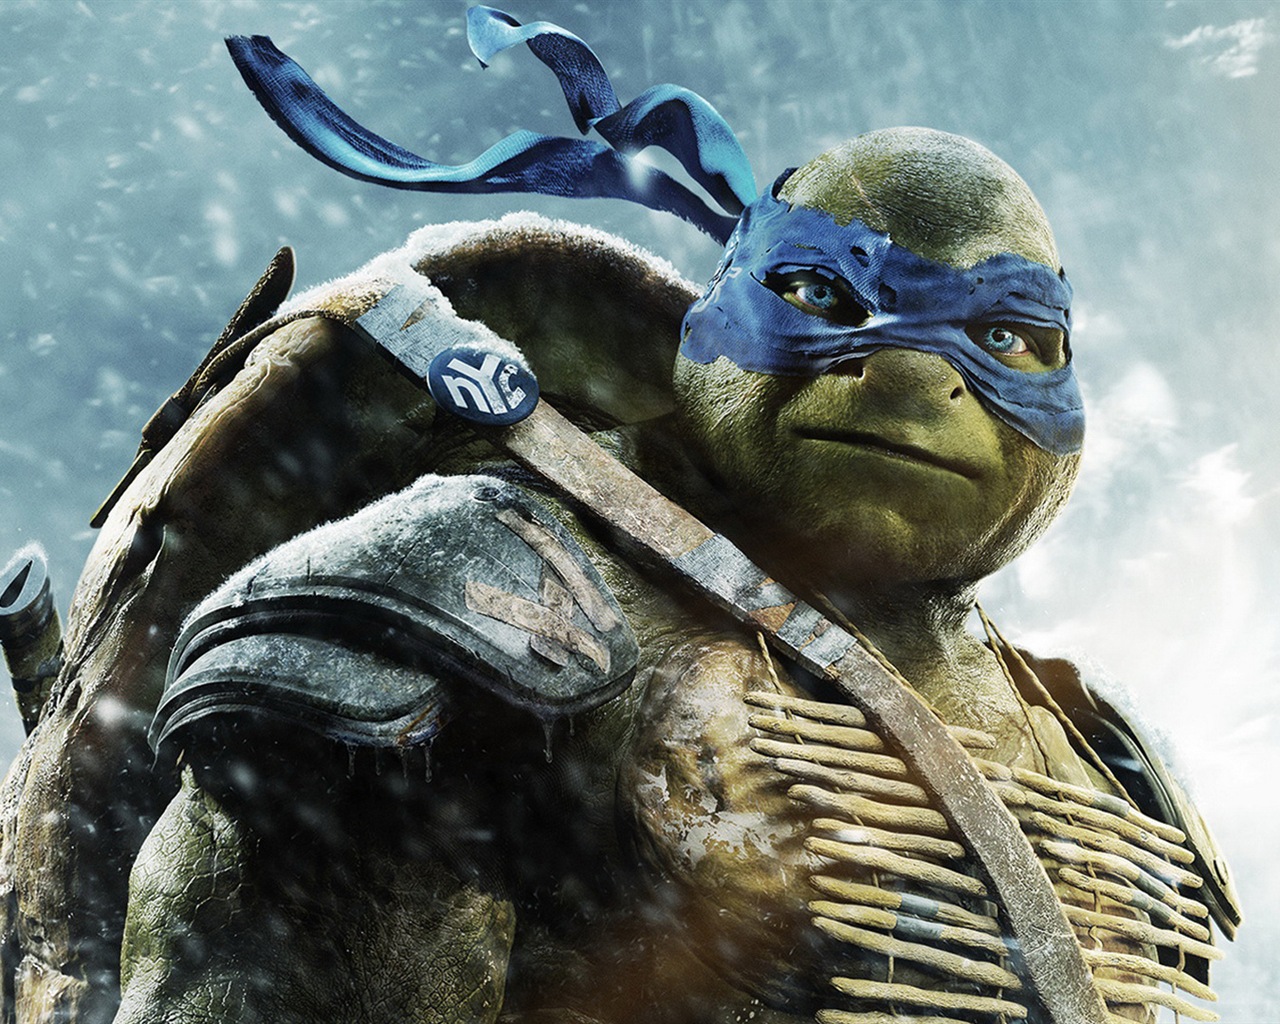 2014 Teenage Mutant Ninja Turtles HD movie wallpapers #1 - 1280x1024